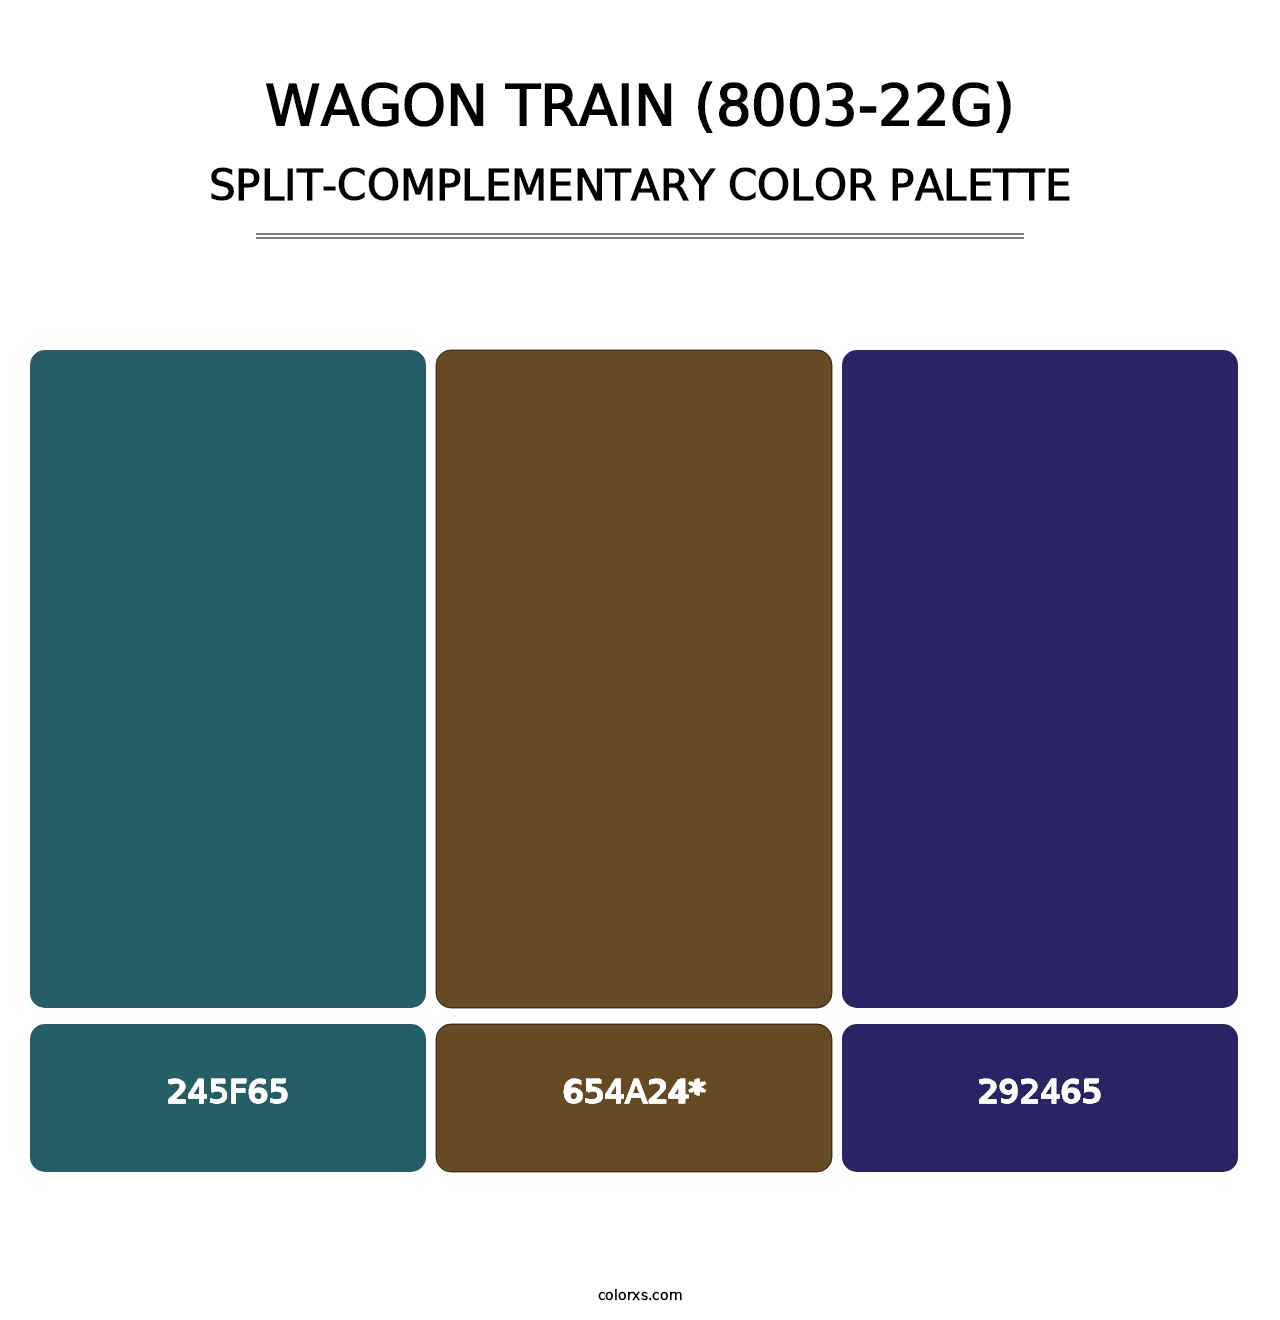 Wagon Train (8003-22G) - Split-Complementary Color Palette